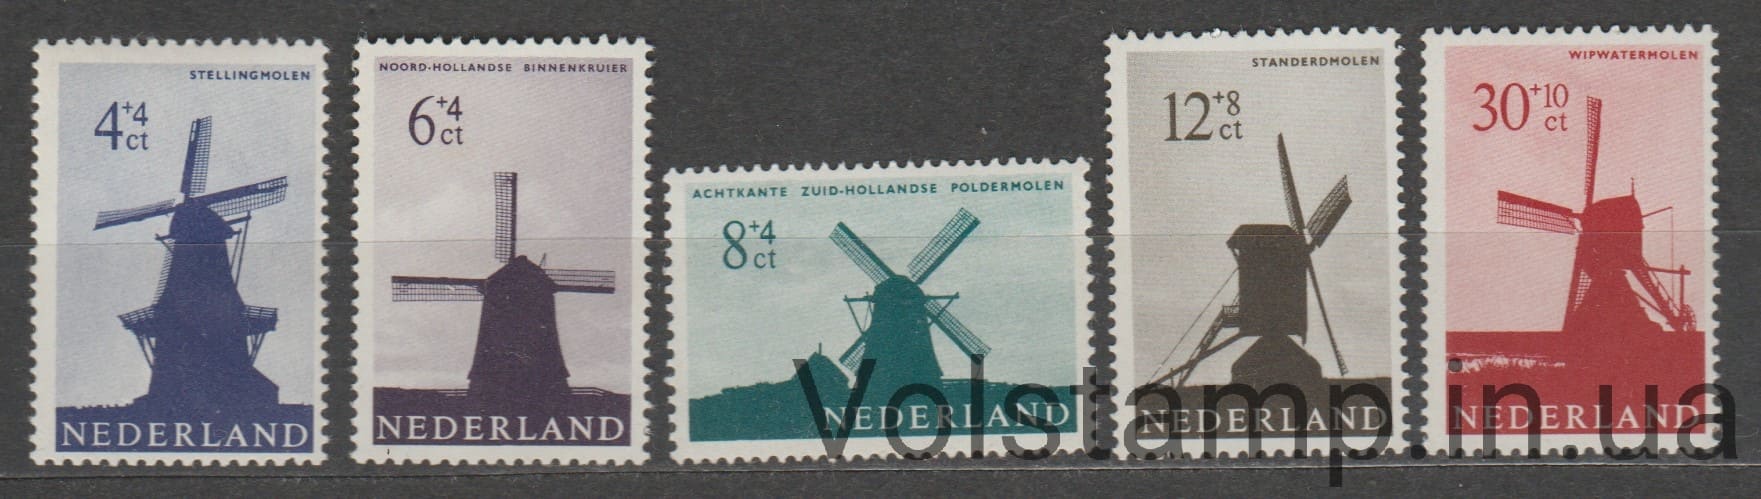 1963 Нидерланды серия марок (Архитектура, мельницы) MNH №794-798